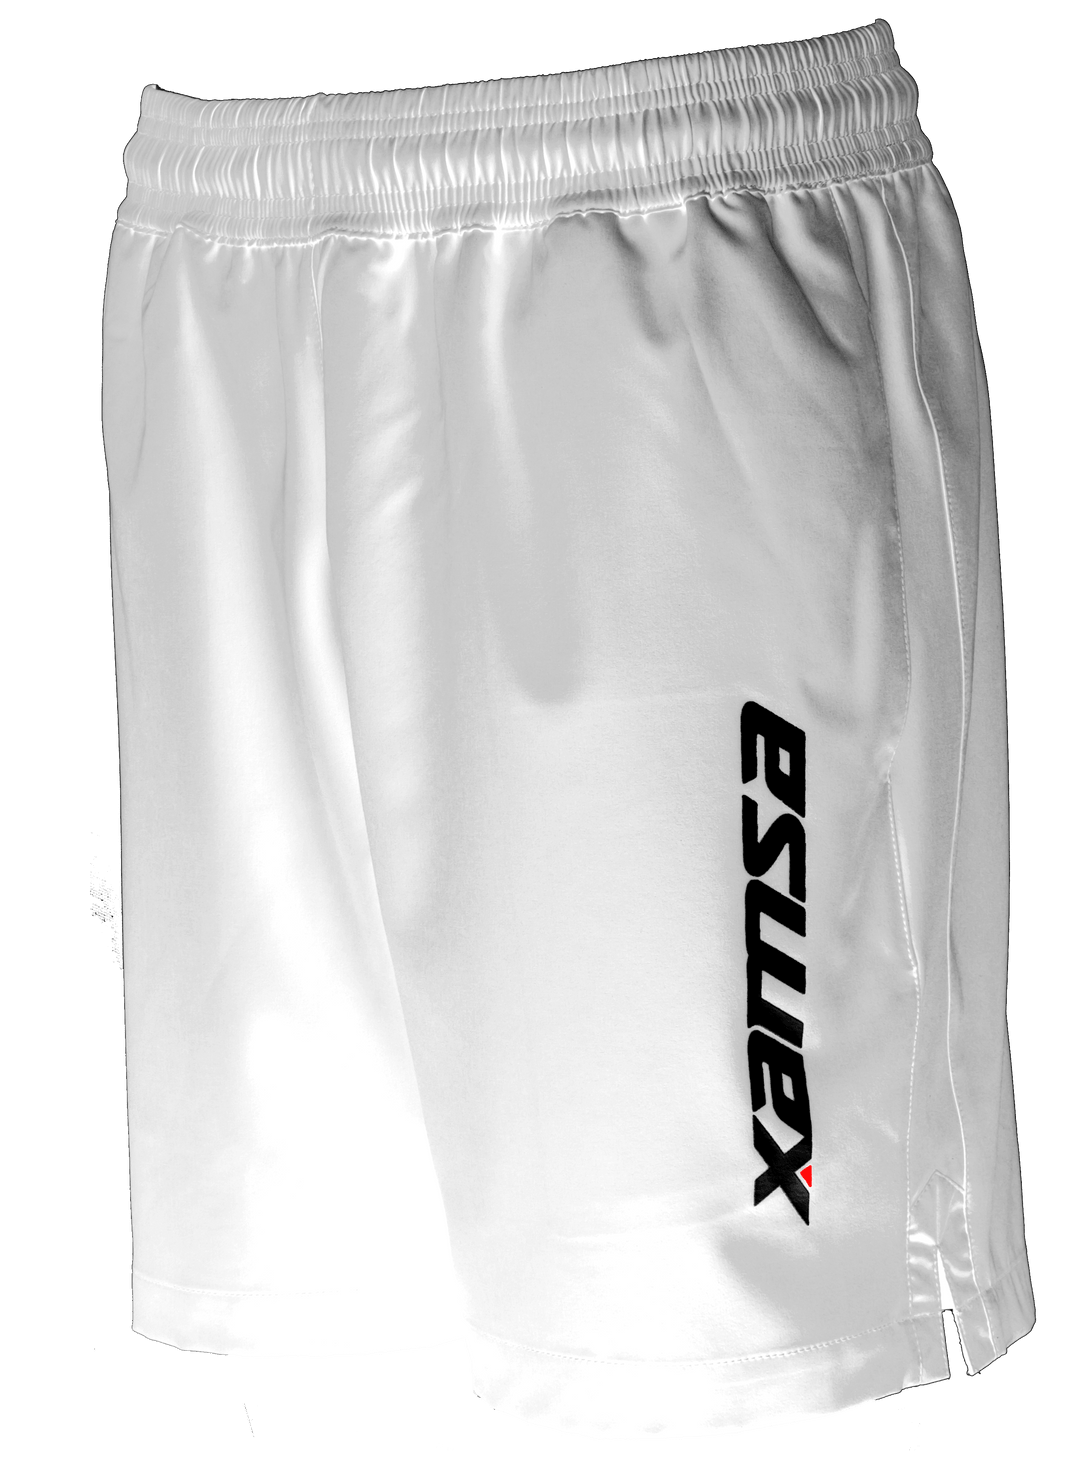 Xamsa Men's Shorts White with logo - XamsaSquash